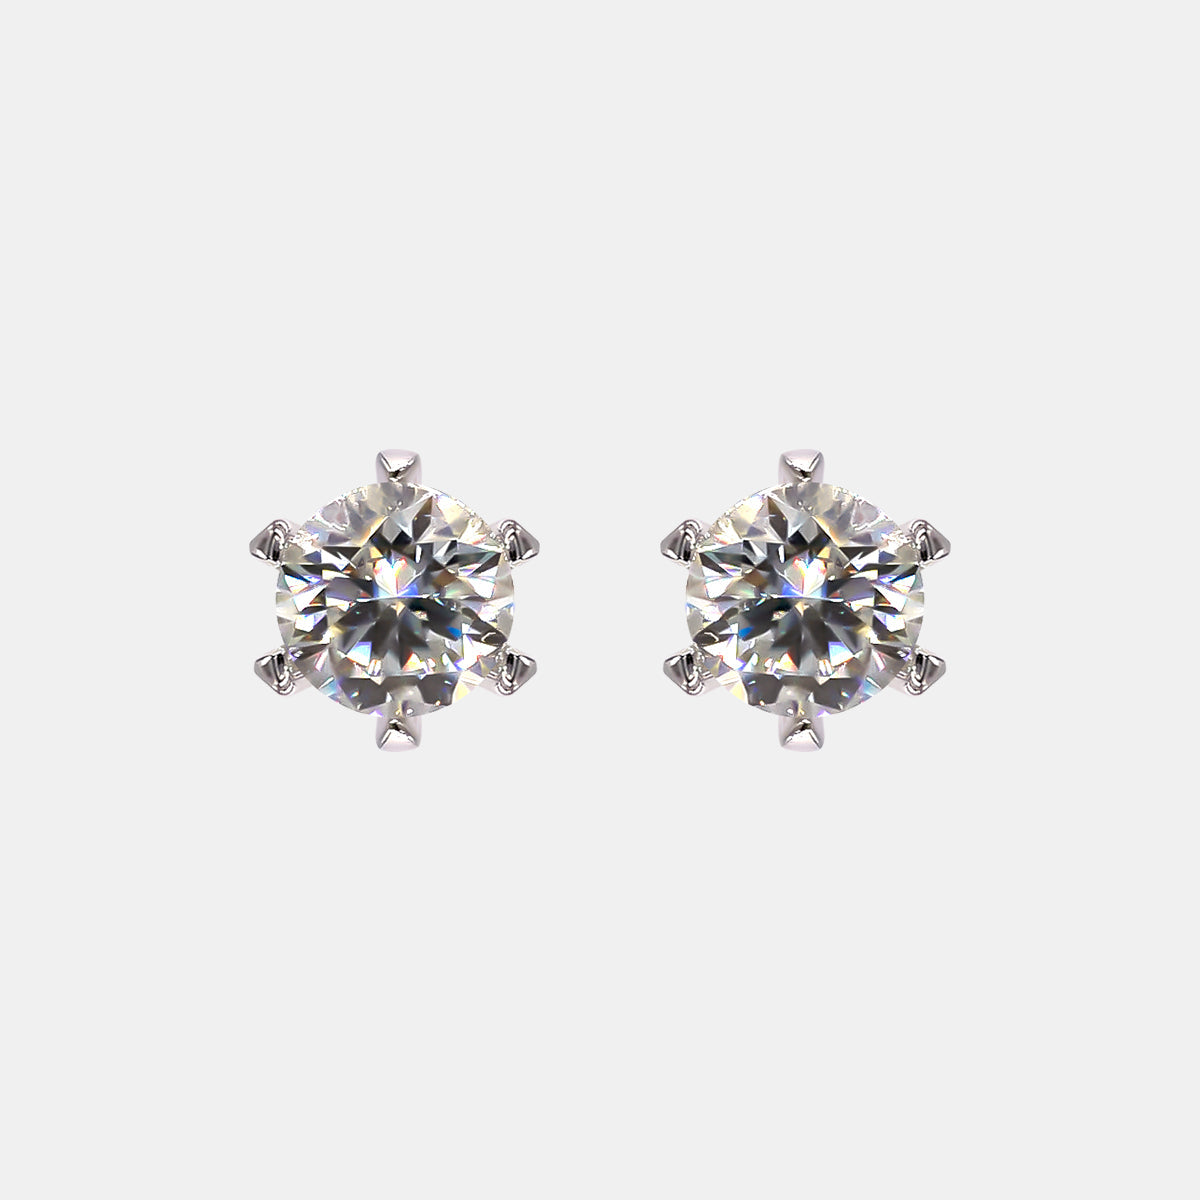 【432】6-prong 0.5 Carat 925 Sterling Silver Earrings